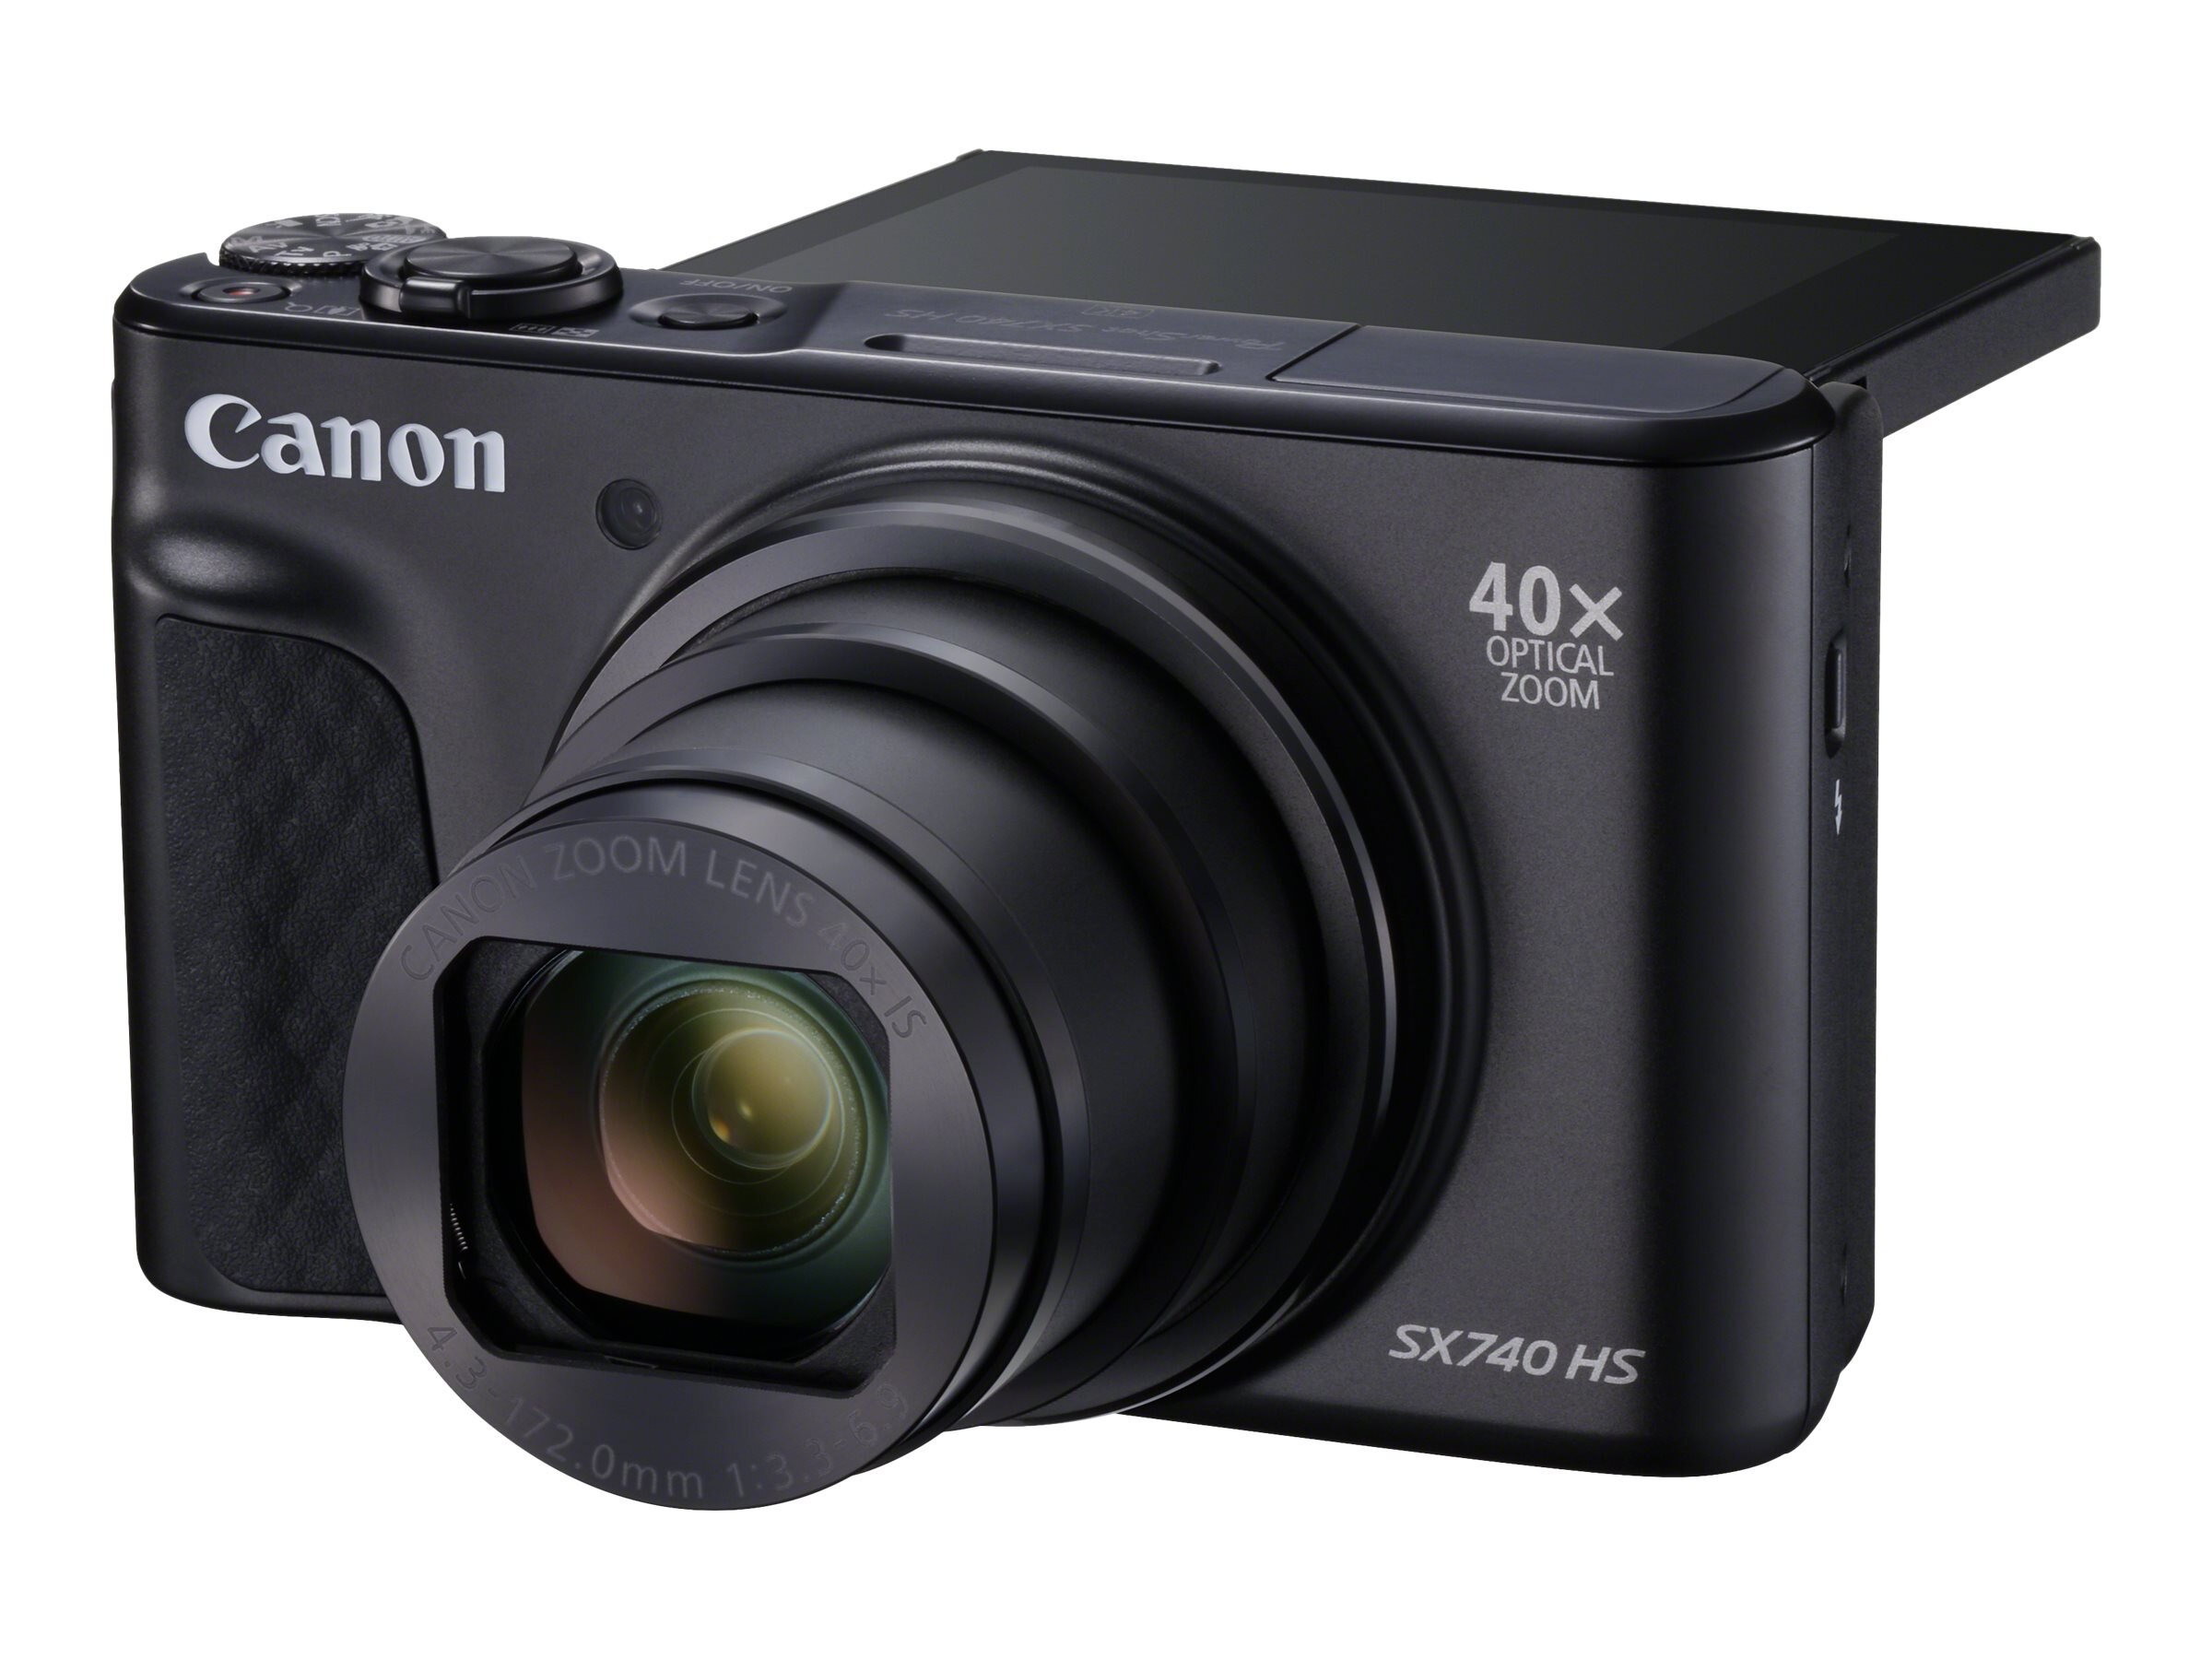 Canon PowerShot SX740 HS Digital Camera, Black